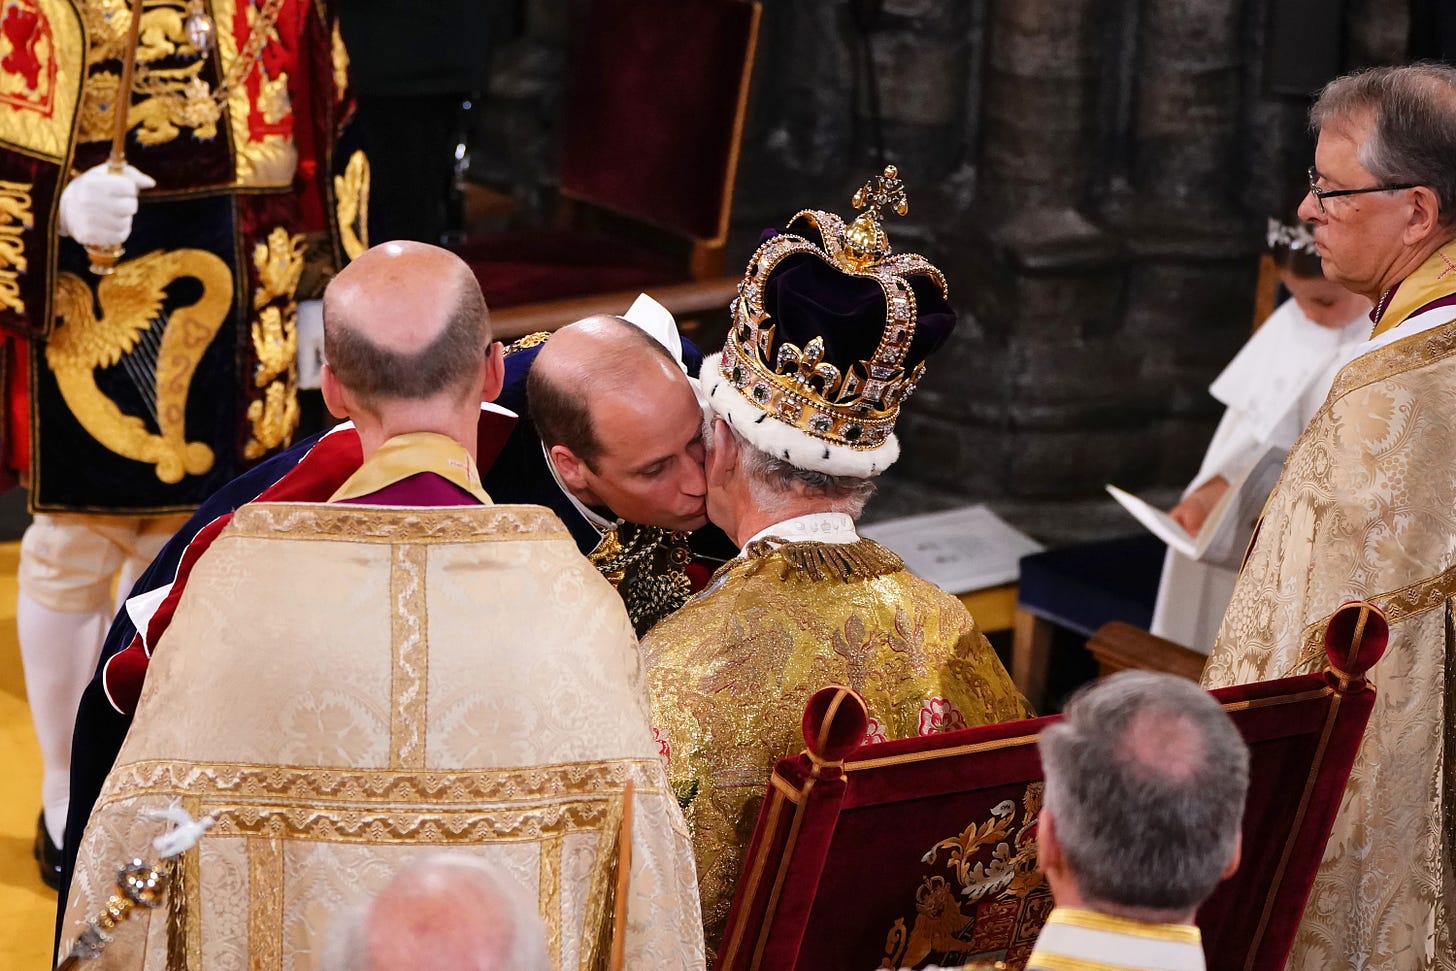 prince william kisses king charles on cheek at coronation